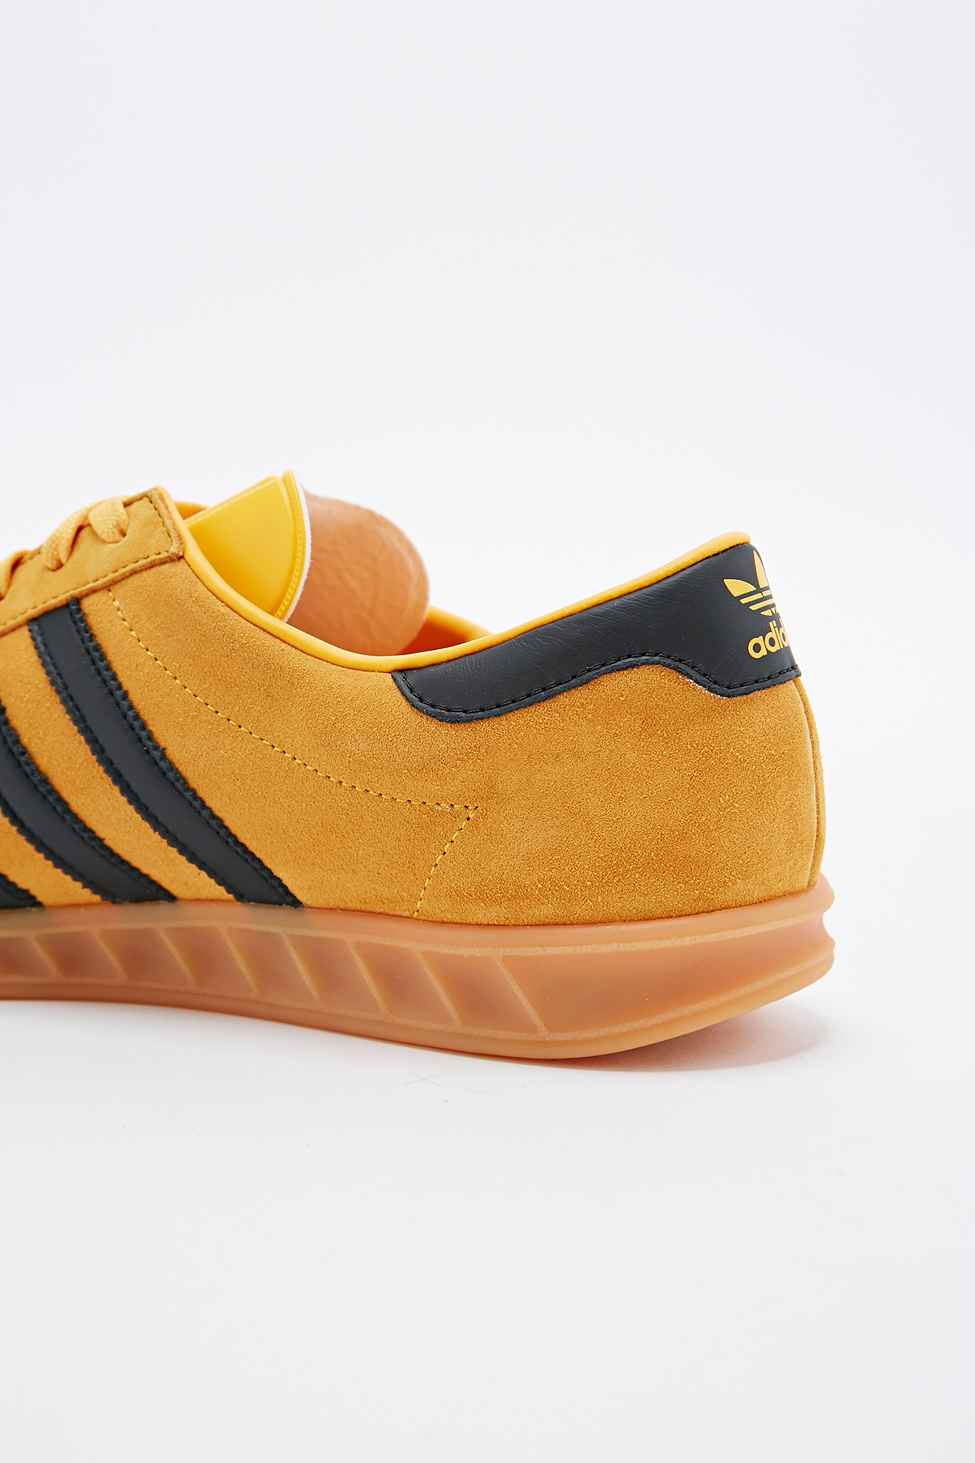 adidas Originals Hamburg Trainers In Mustard in Orange for Men - Lyst